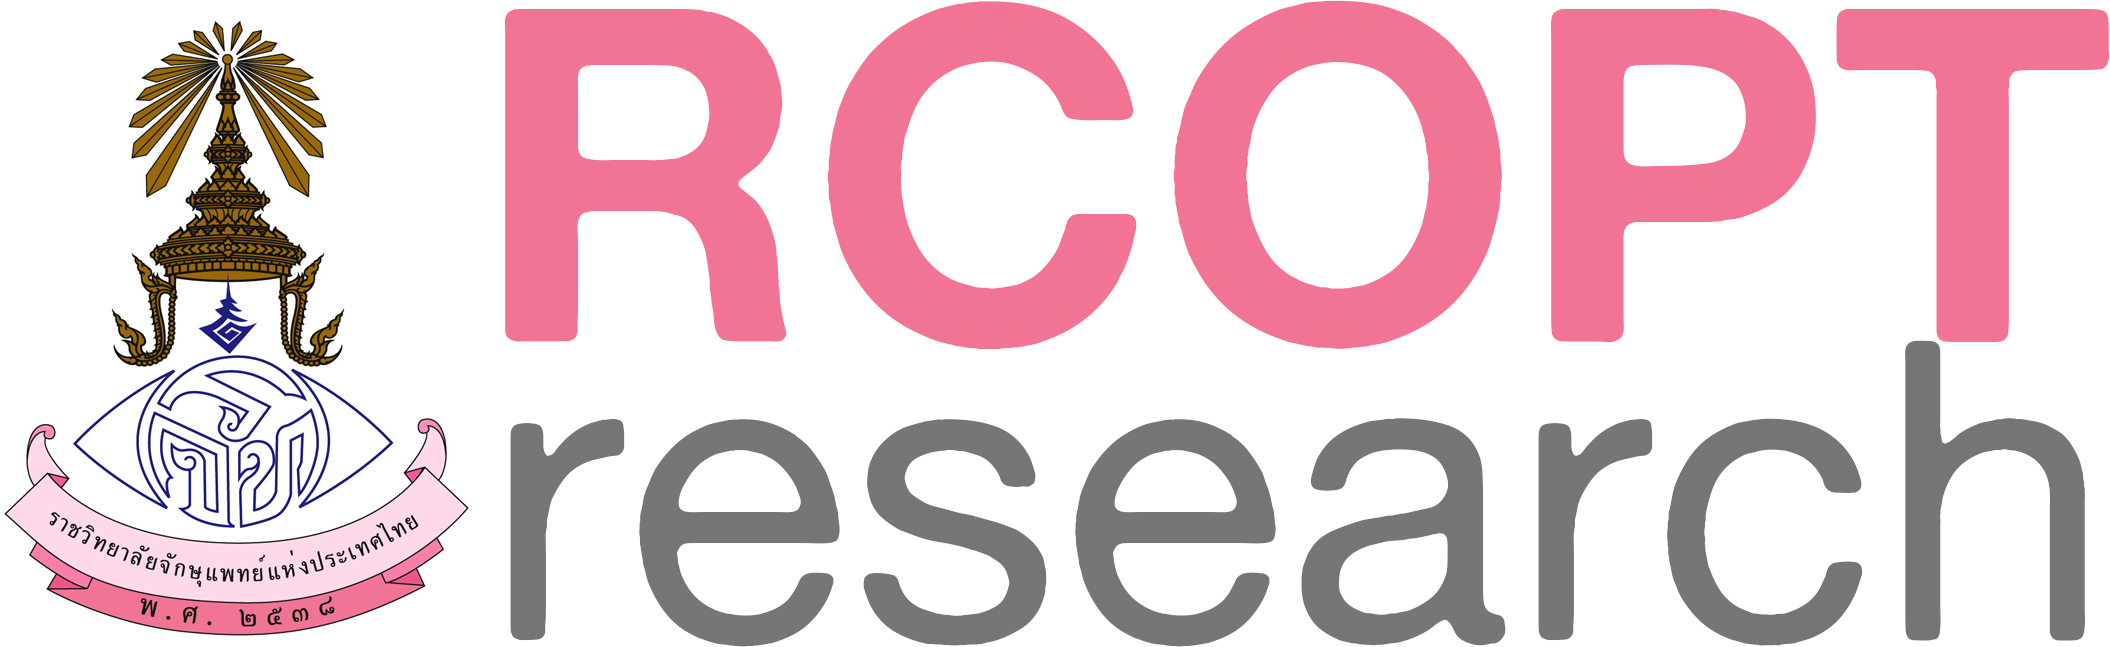 2098RCOPT research logo1.jpg